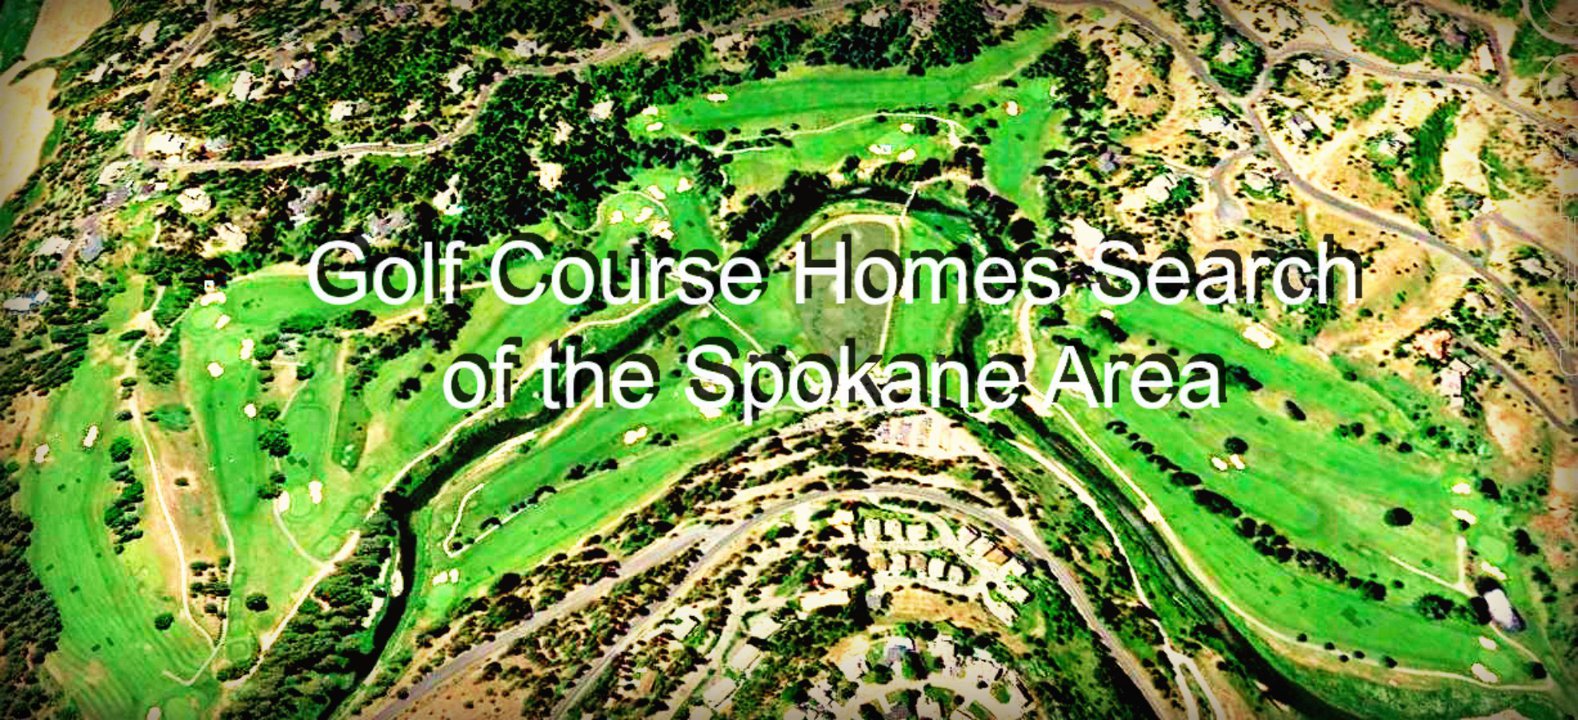 Spokane Area Golf Course Homes for Sale